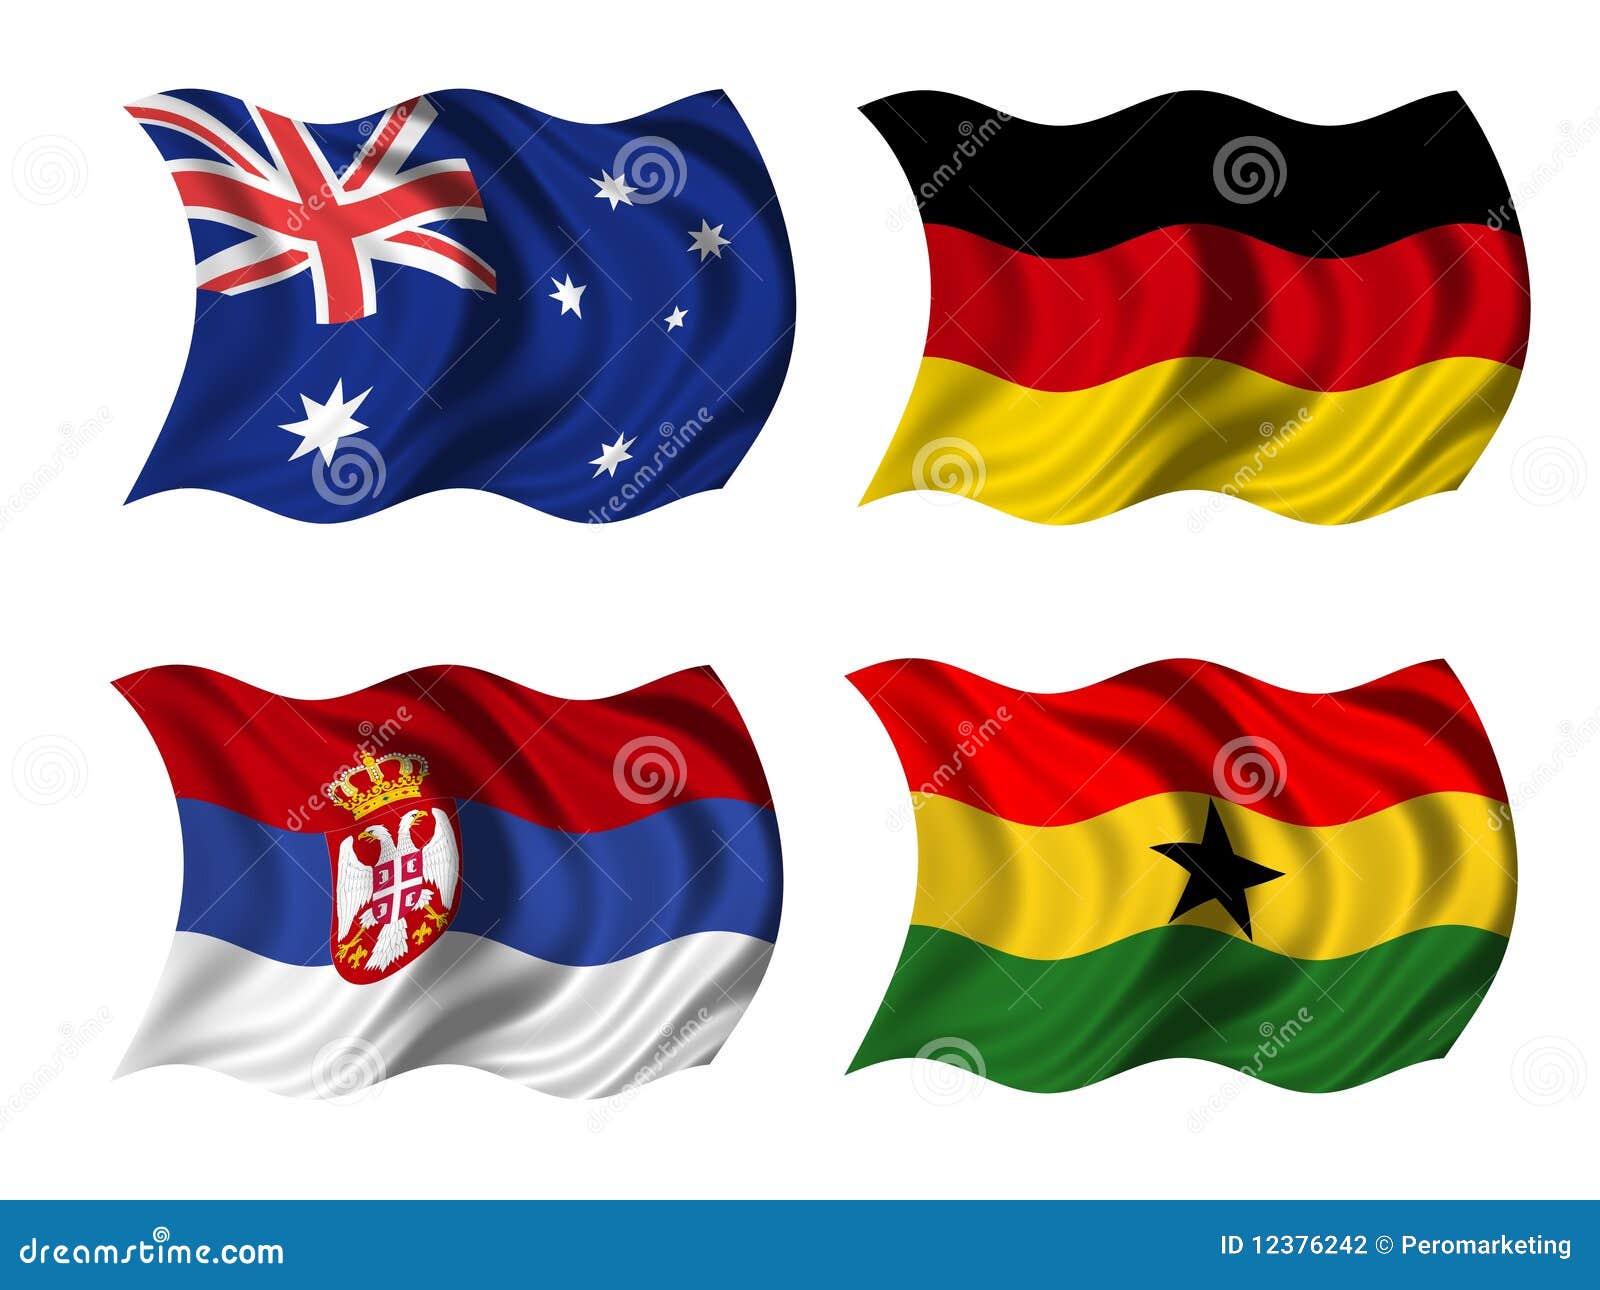 Soccer team flags group D stock illustration. Illustration of africa